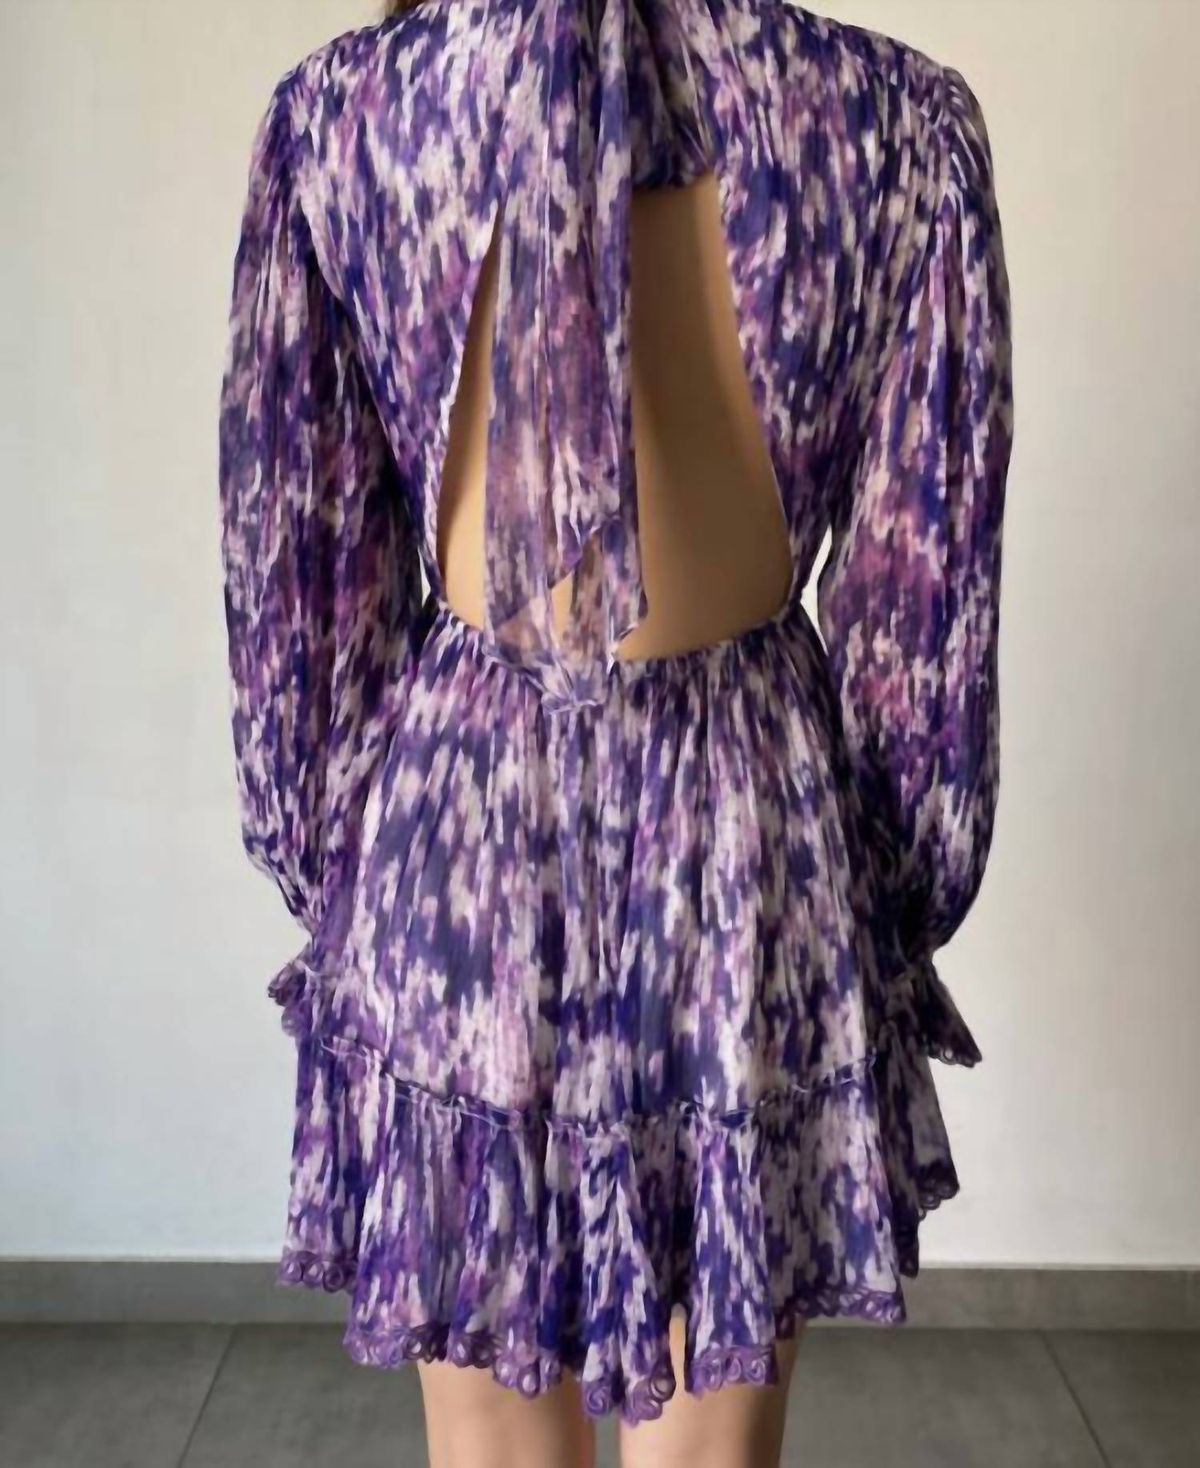 Style 1-2232346821-2901 HEMANT & NANDITA Size M Purple Cocktail Dress on Queenly